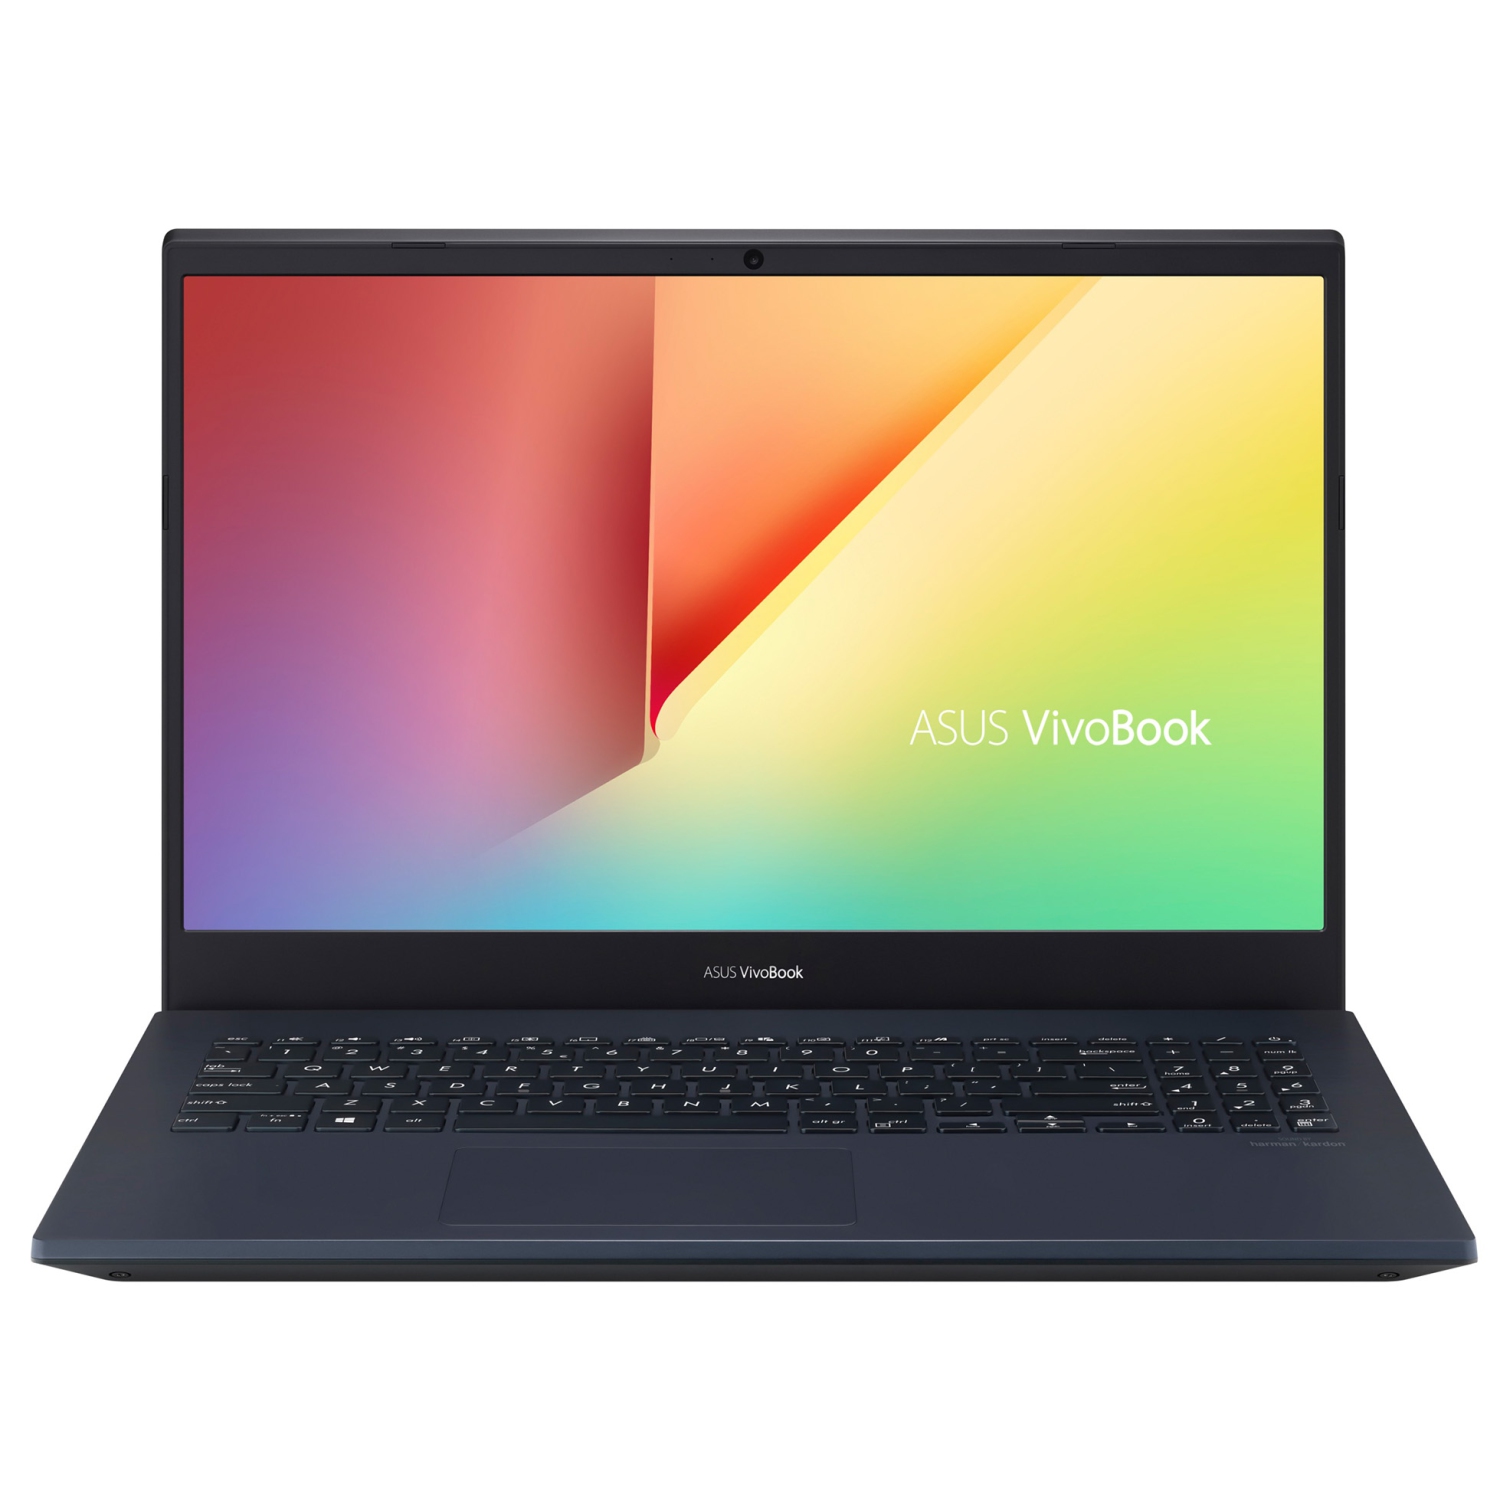 Custom ASUS VivoBook Laptop (Intel i5-10300H, 12GB RAM, 2TB PCIe SSD, NVIDIA GTX 1650, 15.6" Full HD (1920x1080), Win 10 Pro)